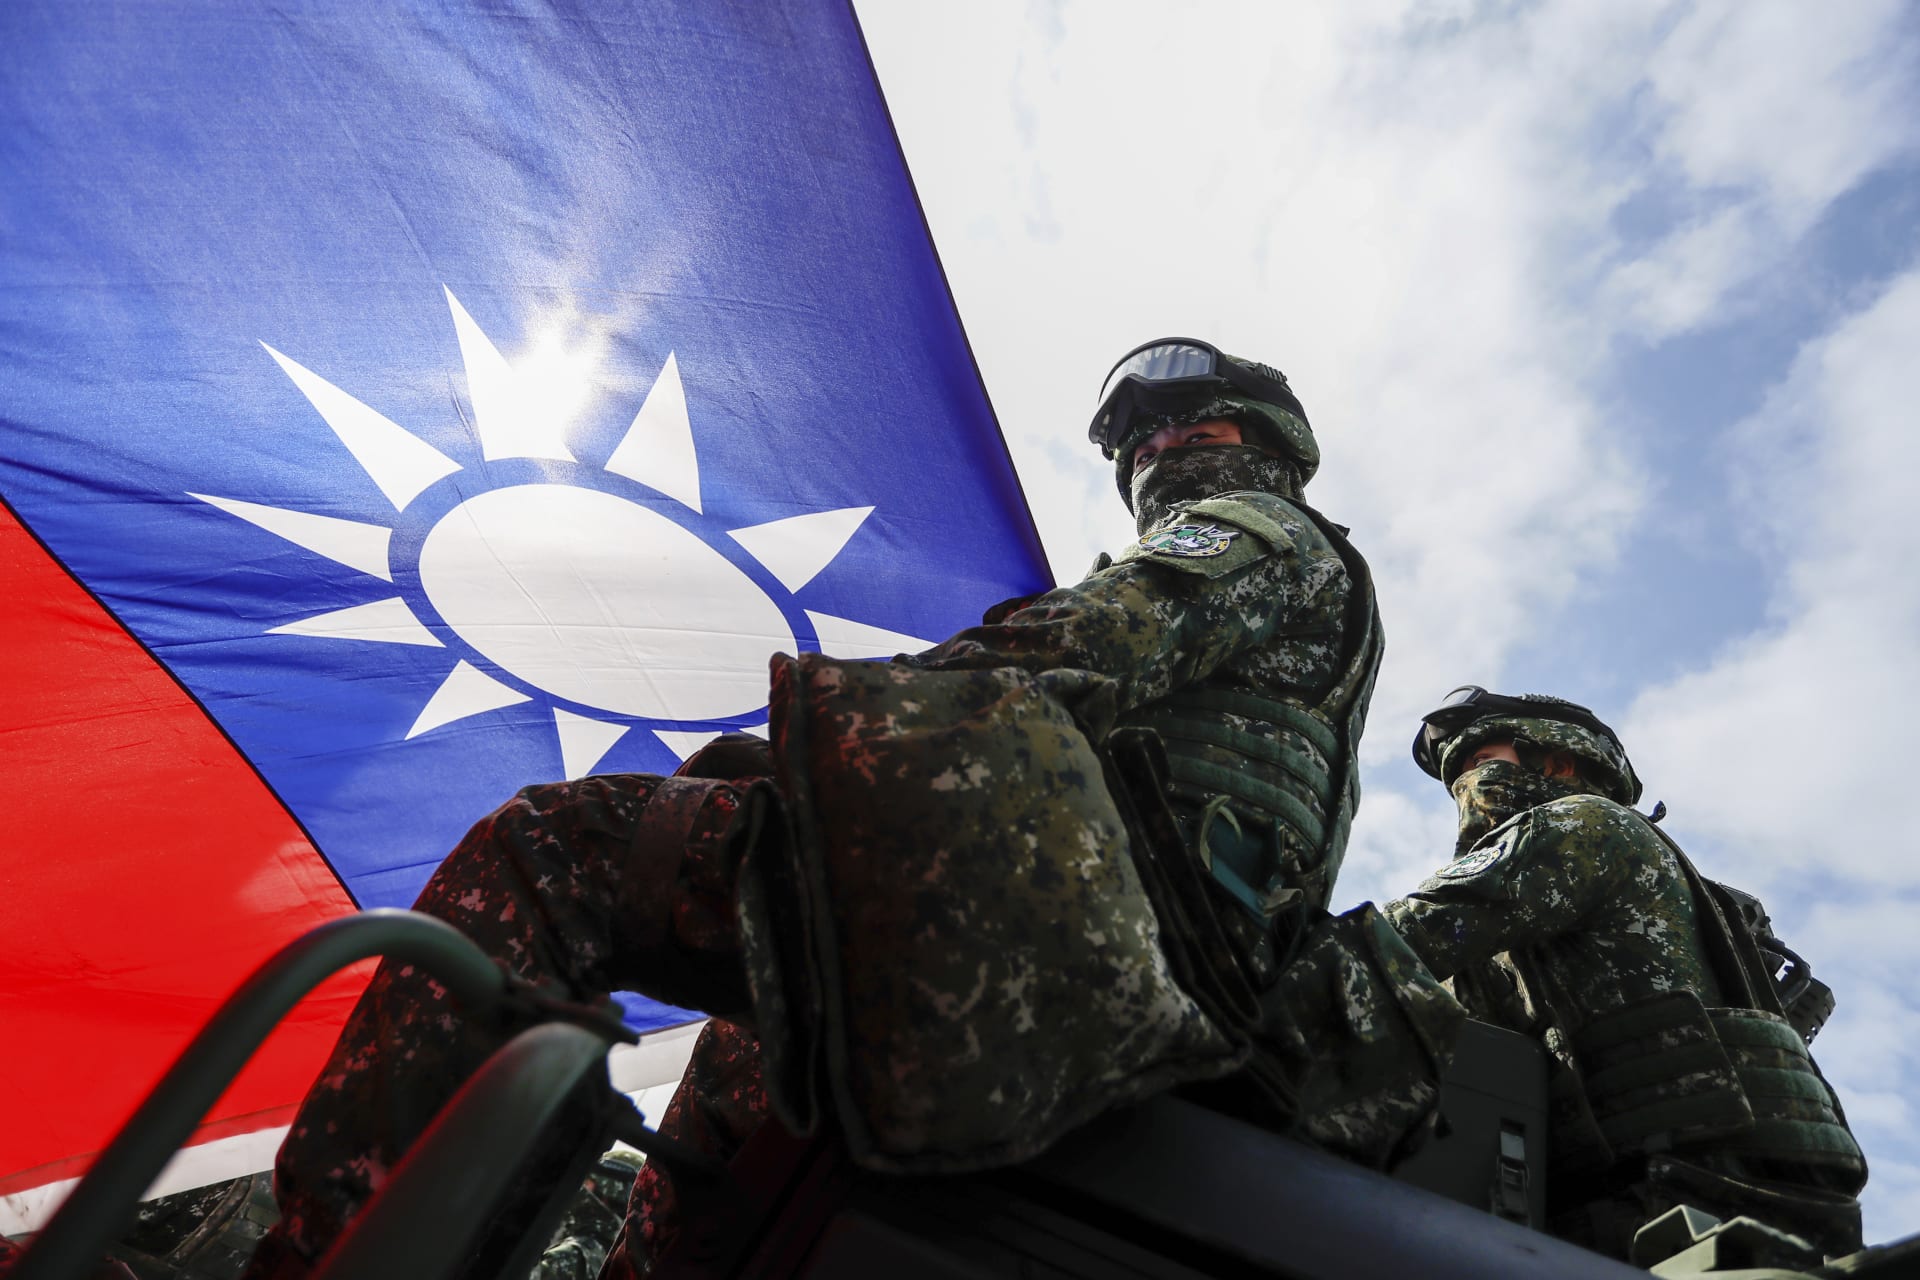 Vojáci Tchaj-wanu